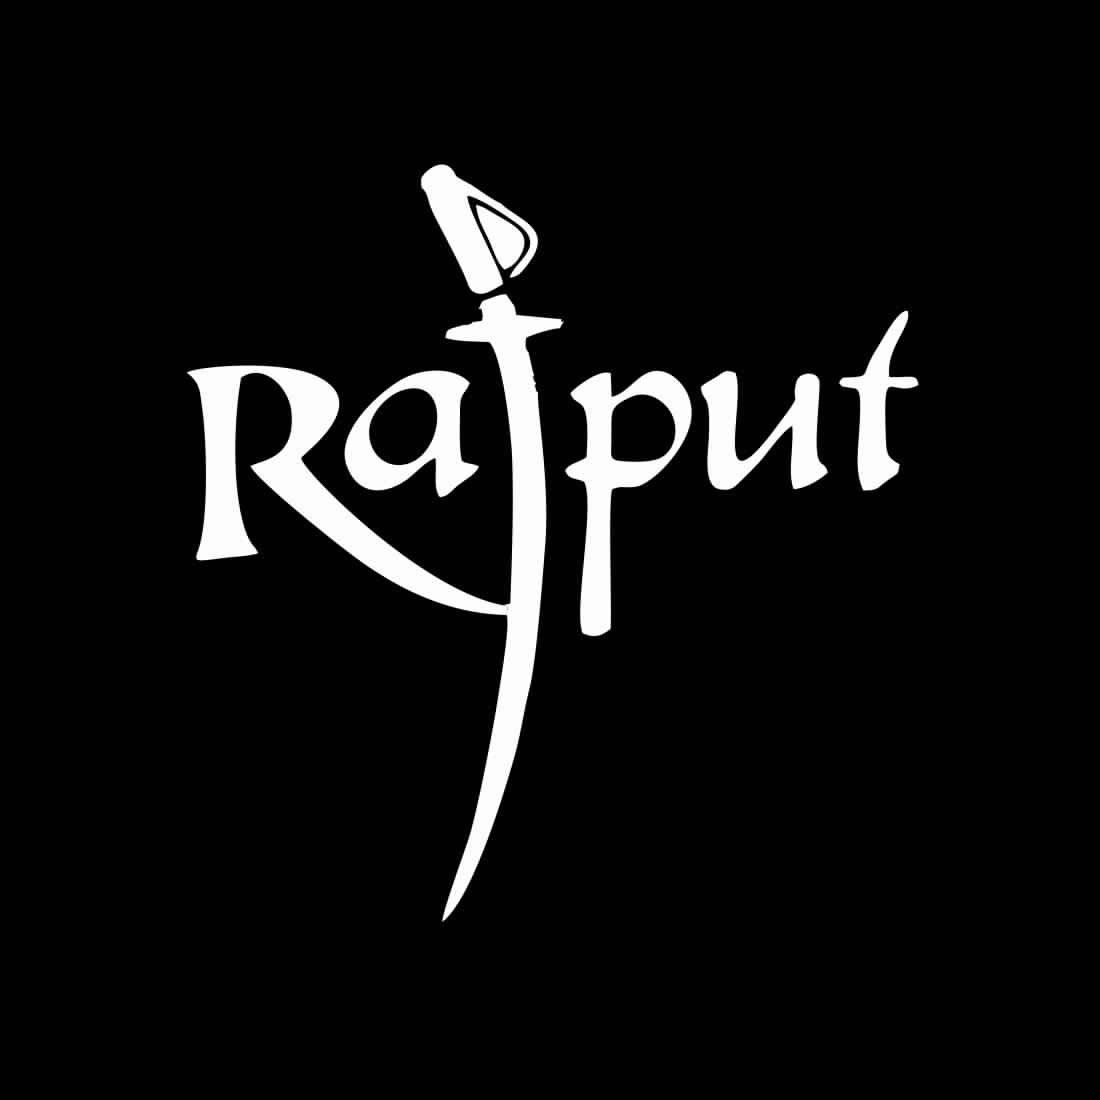 Rajput. Phone screen wallpaper, Rajputana logo, New wallpaper hd